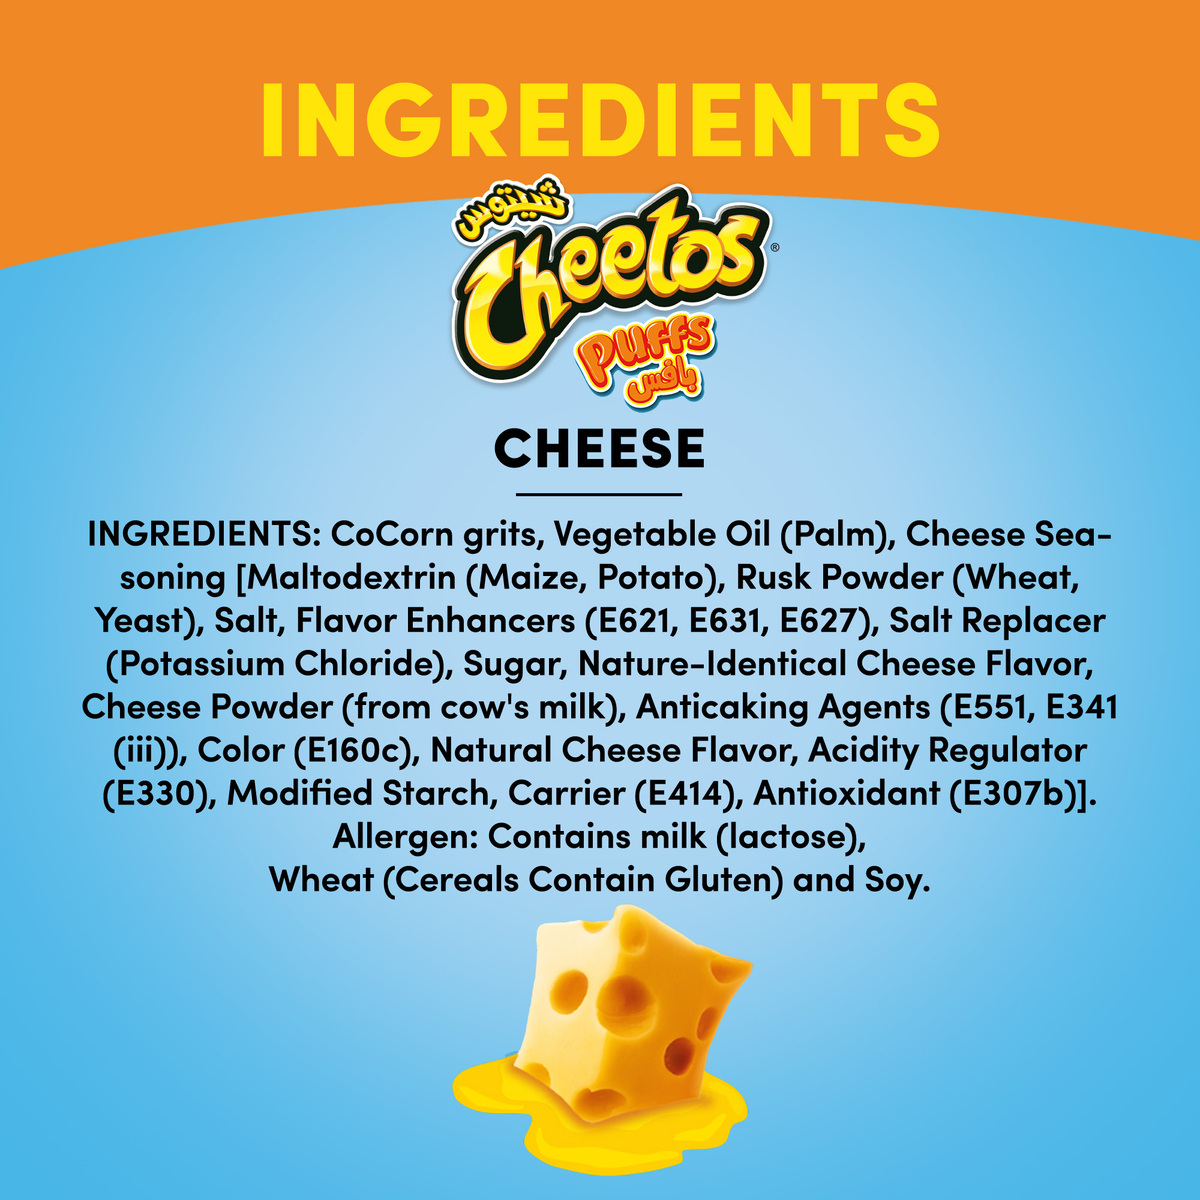 Cheetos Cheese Puffed Corn Snack 18 x 18 g